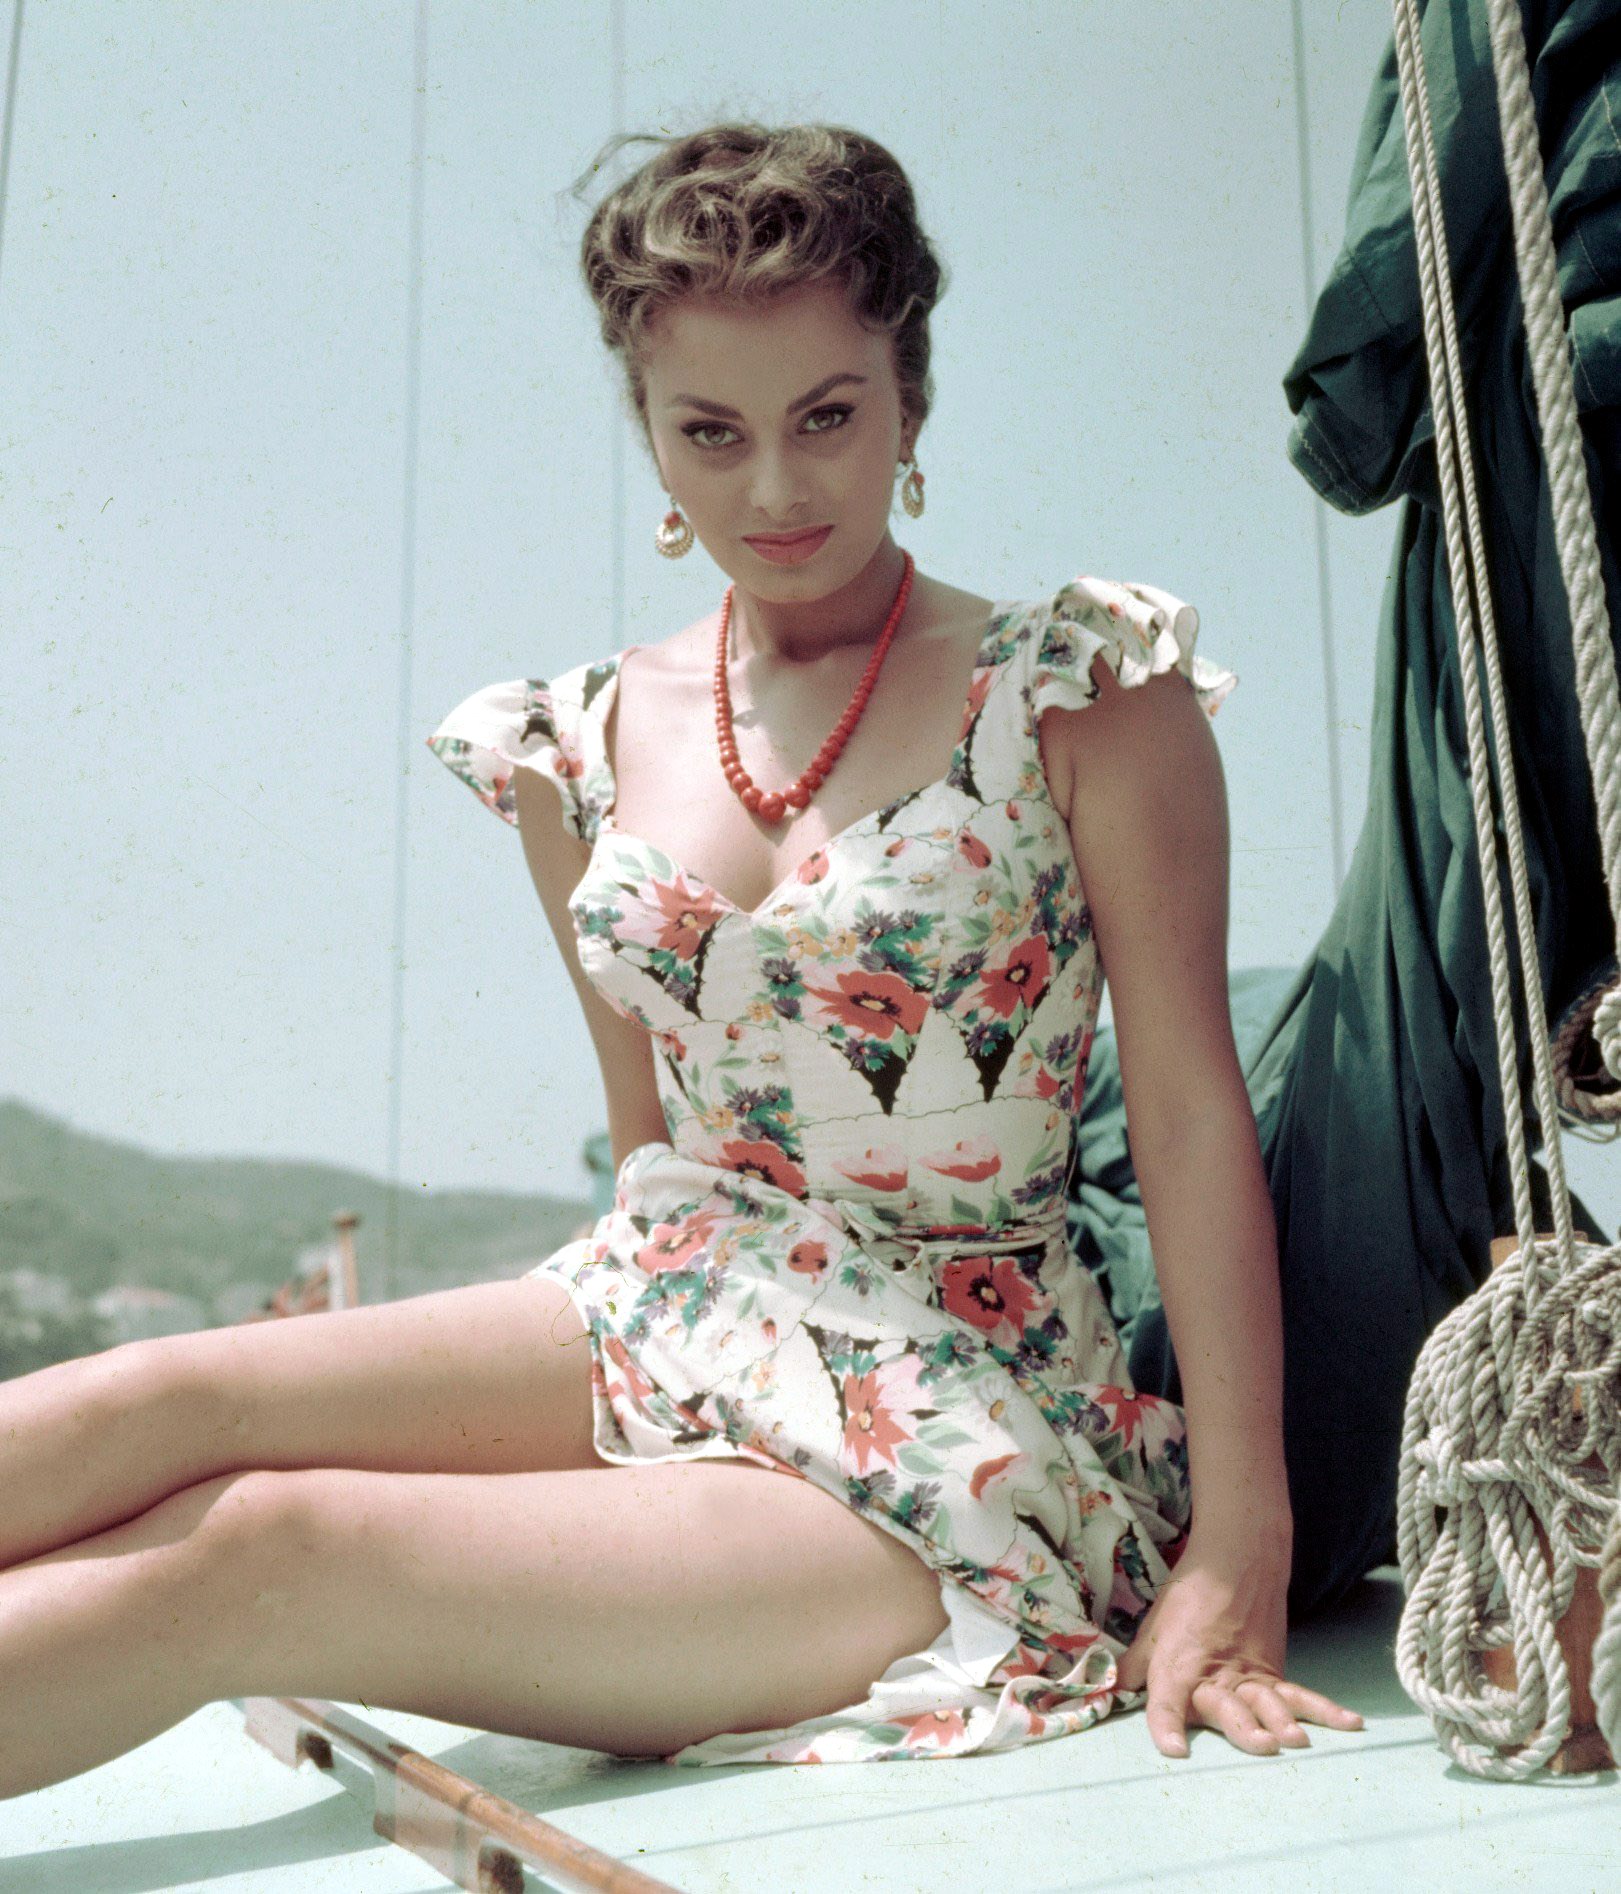 Another photo of beautiful Sophia Loren